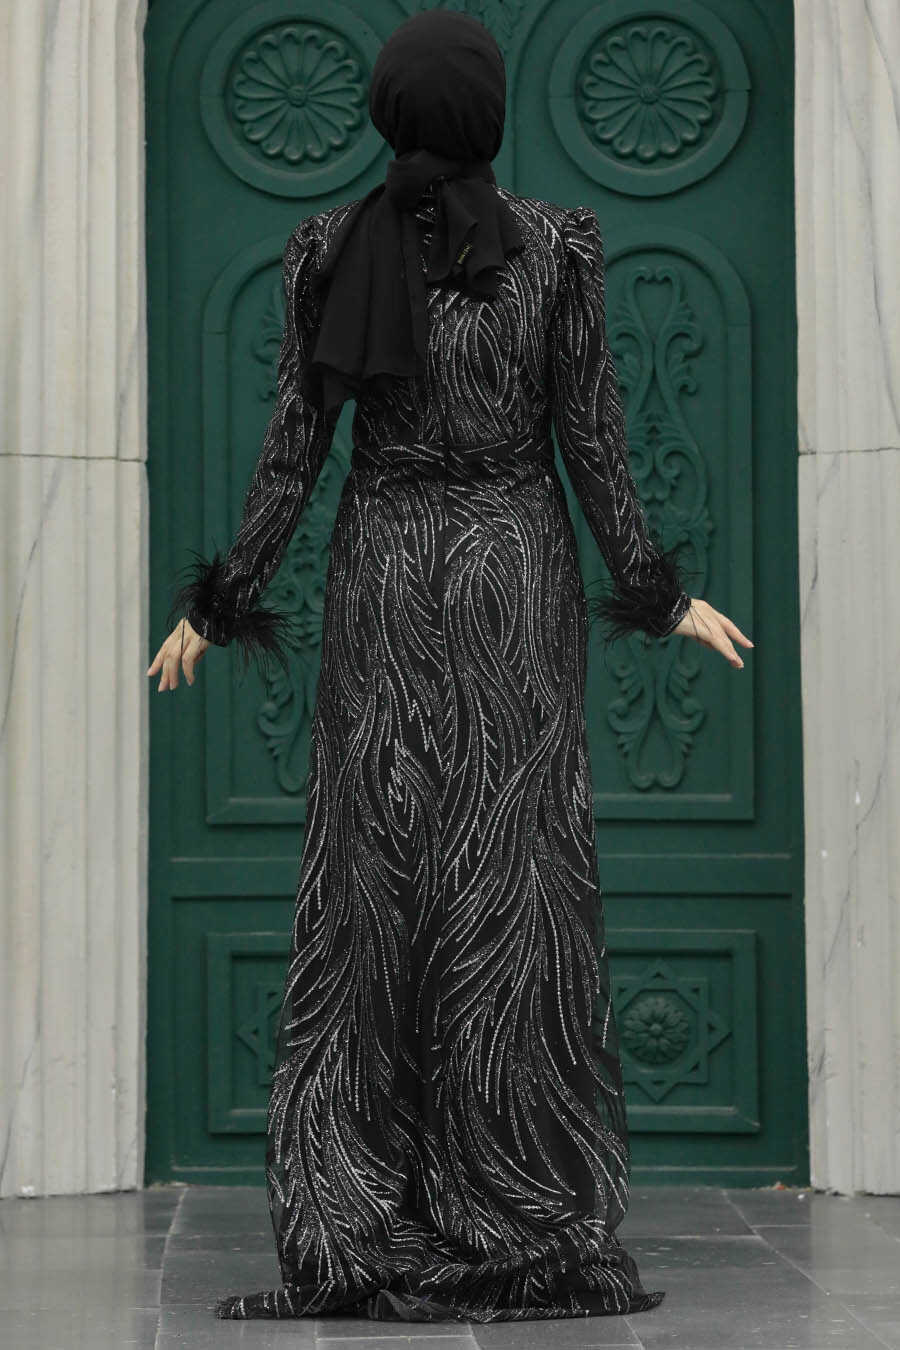 Neva Style - Elegant Black Islamic Evening Dress 23061S